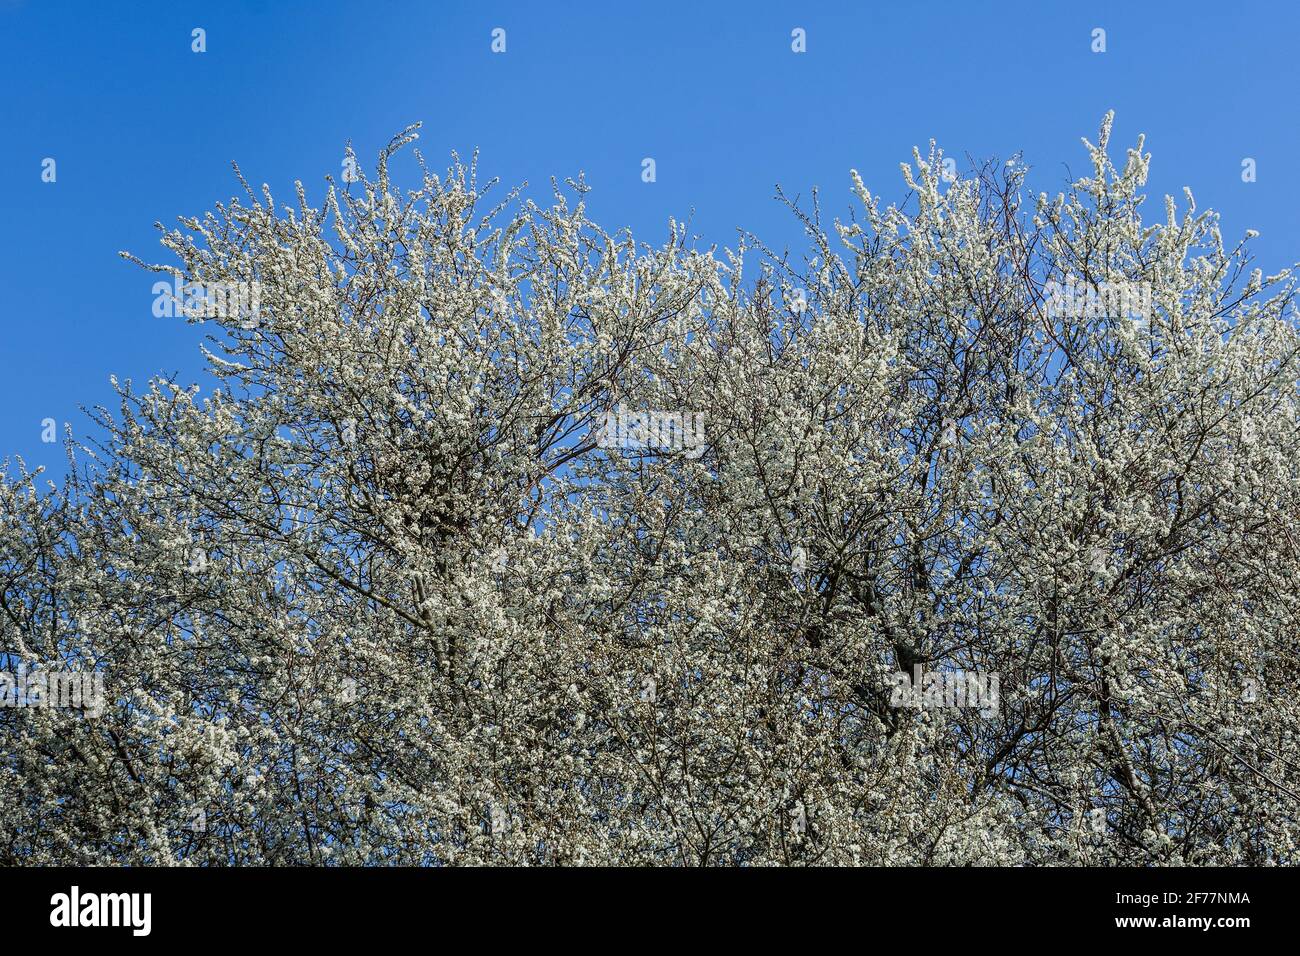 Mai blüht auf Weißdorn (Crataegus monogyna) Bäumen - Anfang April gesehen. Stockfoto